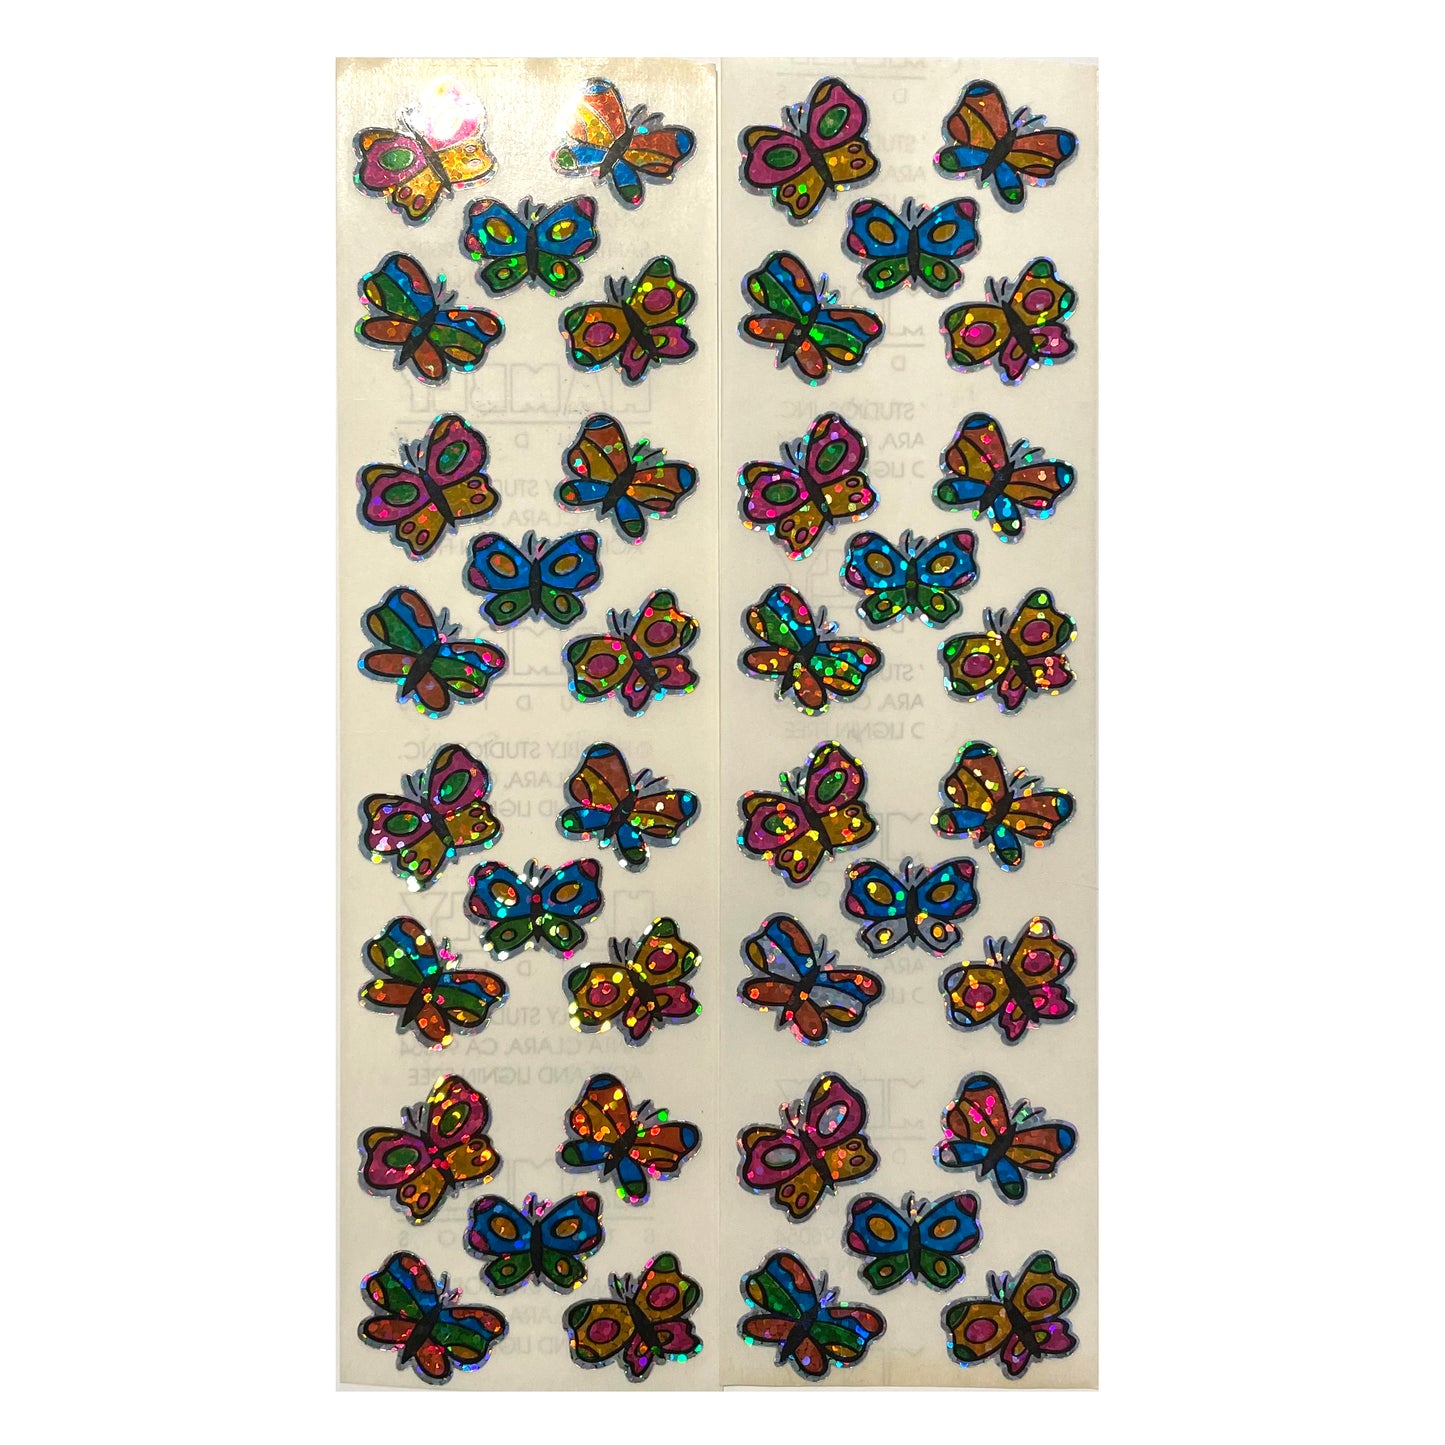 HAMBLY:Micro Cartoon Butterfly glitter stickers